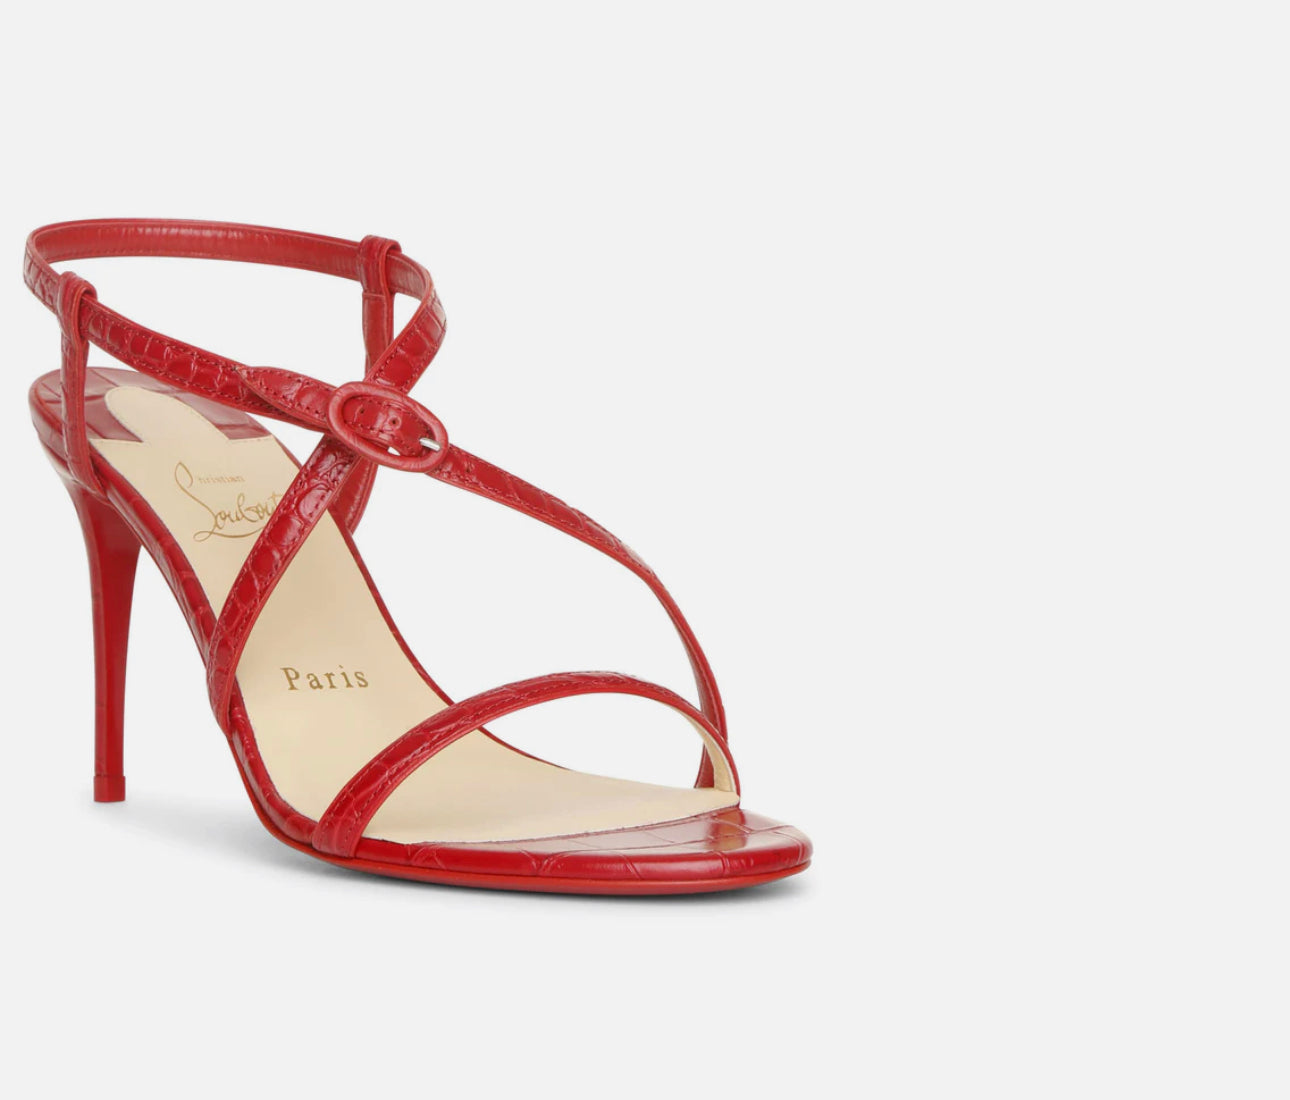 Louboutin Selima Red heels